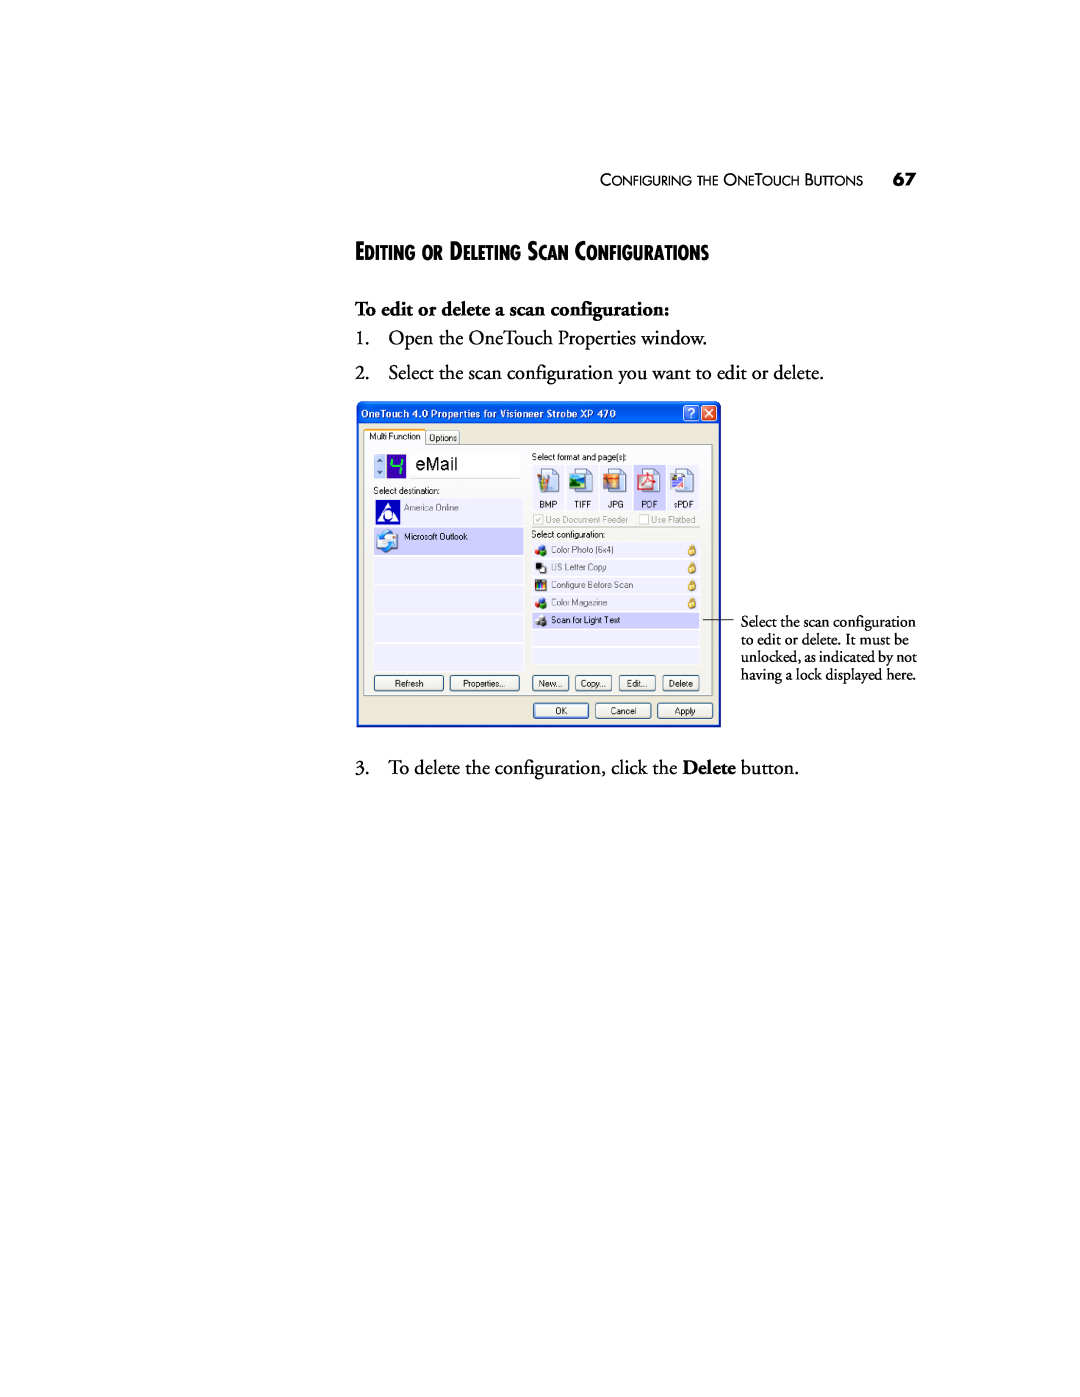 Visioneer XP 470 manual Editing Or Deleting Scan Configurations, To edit or delete a scan configuration 